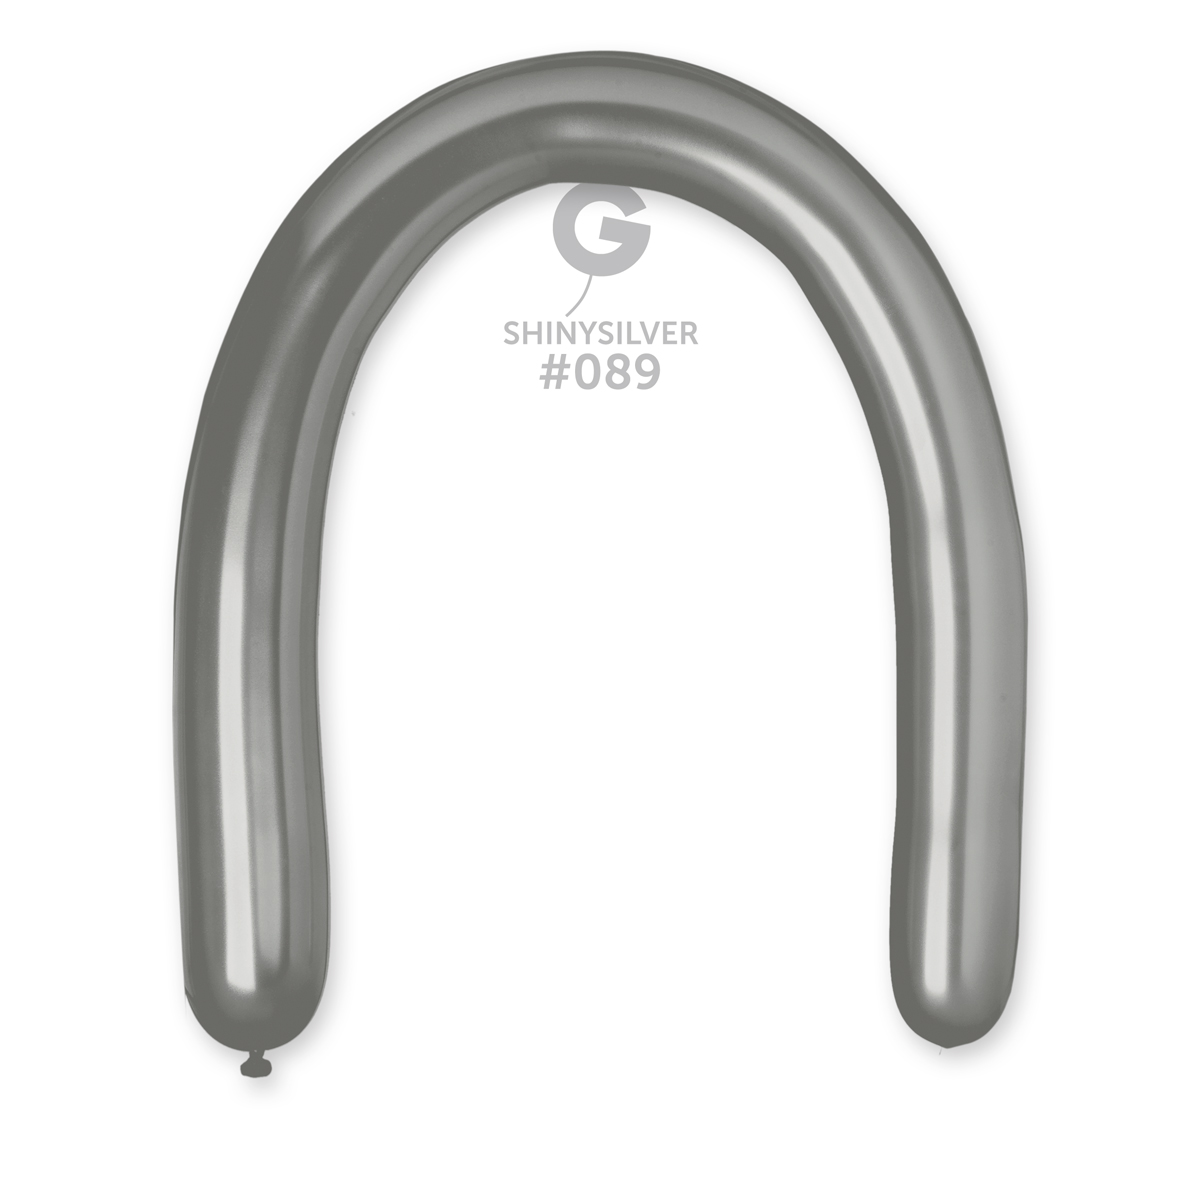 360G Gemar Latex Balloons (Bag of 25) Shiny Silver Twisting/Modelling